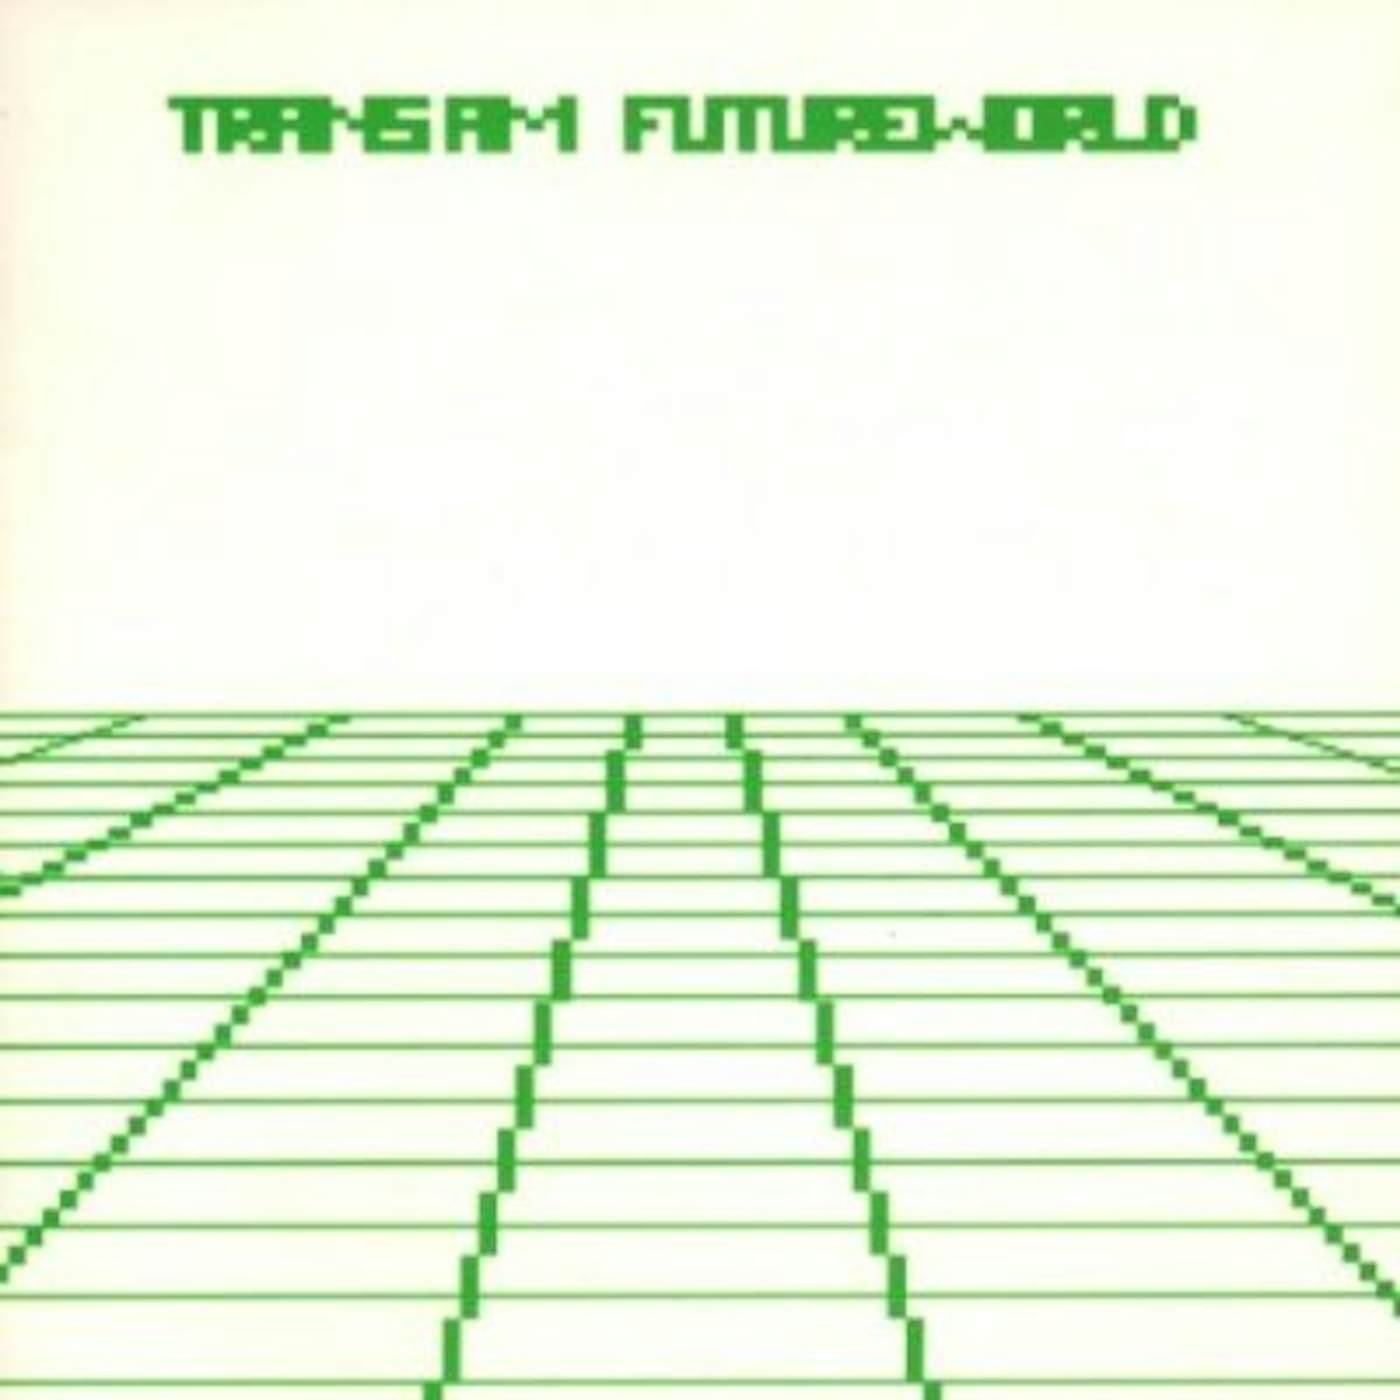 Trans Am FUTUREWORLD CD